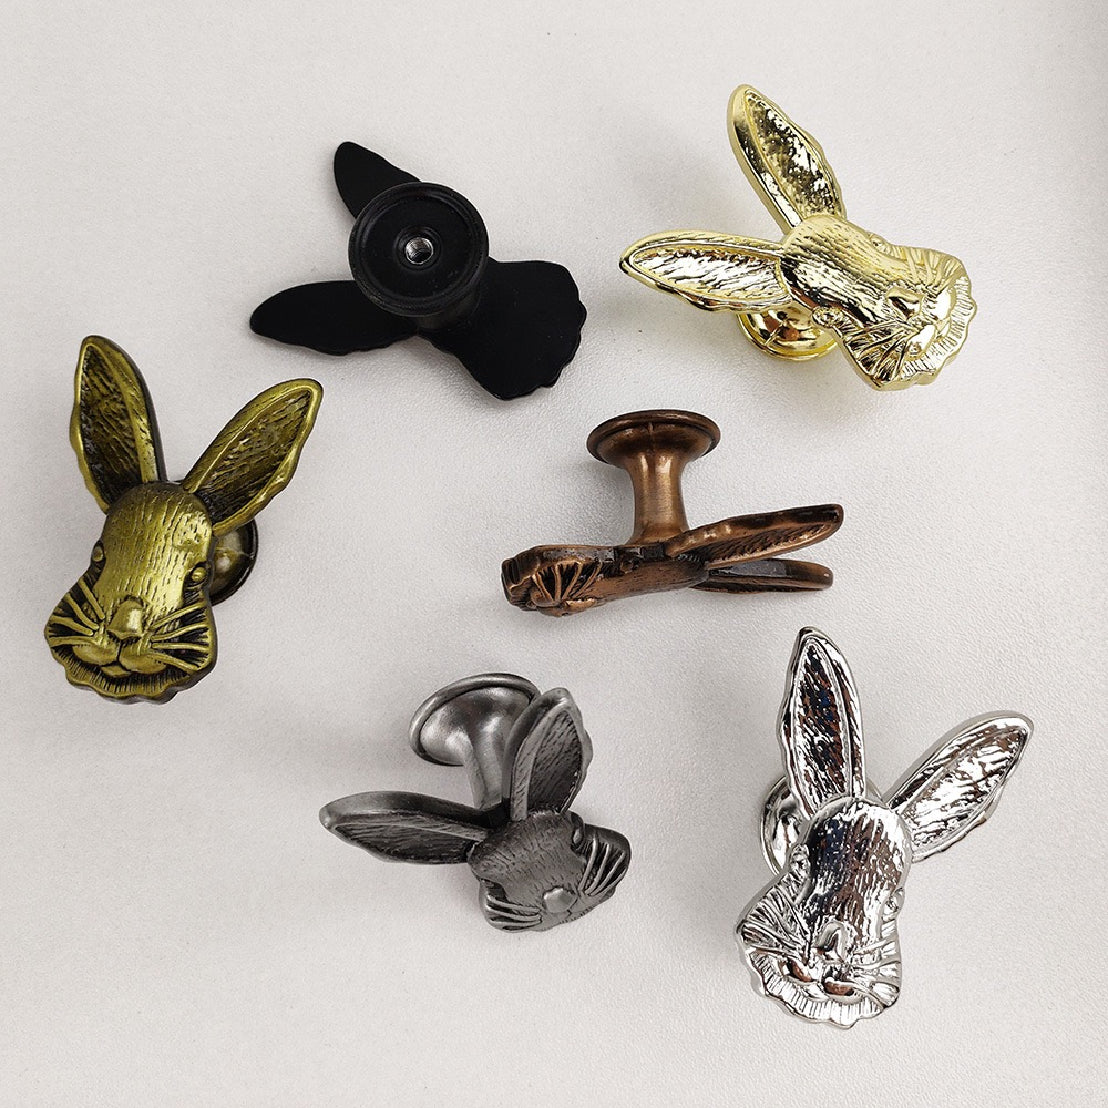 3-Piece Rabbit Clothes Hooks Set, Zinc Alloy Single Hole Pull Handle, Golden Cabinet Drawer Handles, Decorative Wall Hooks